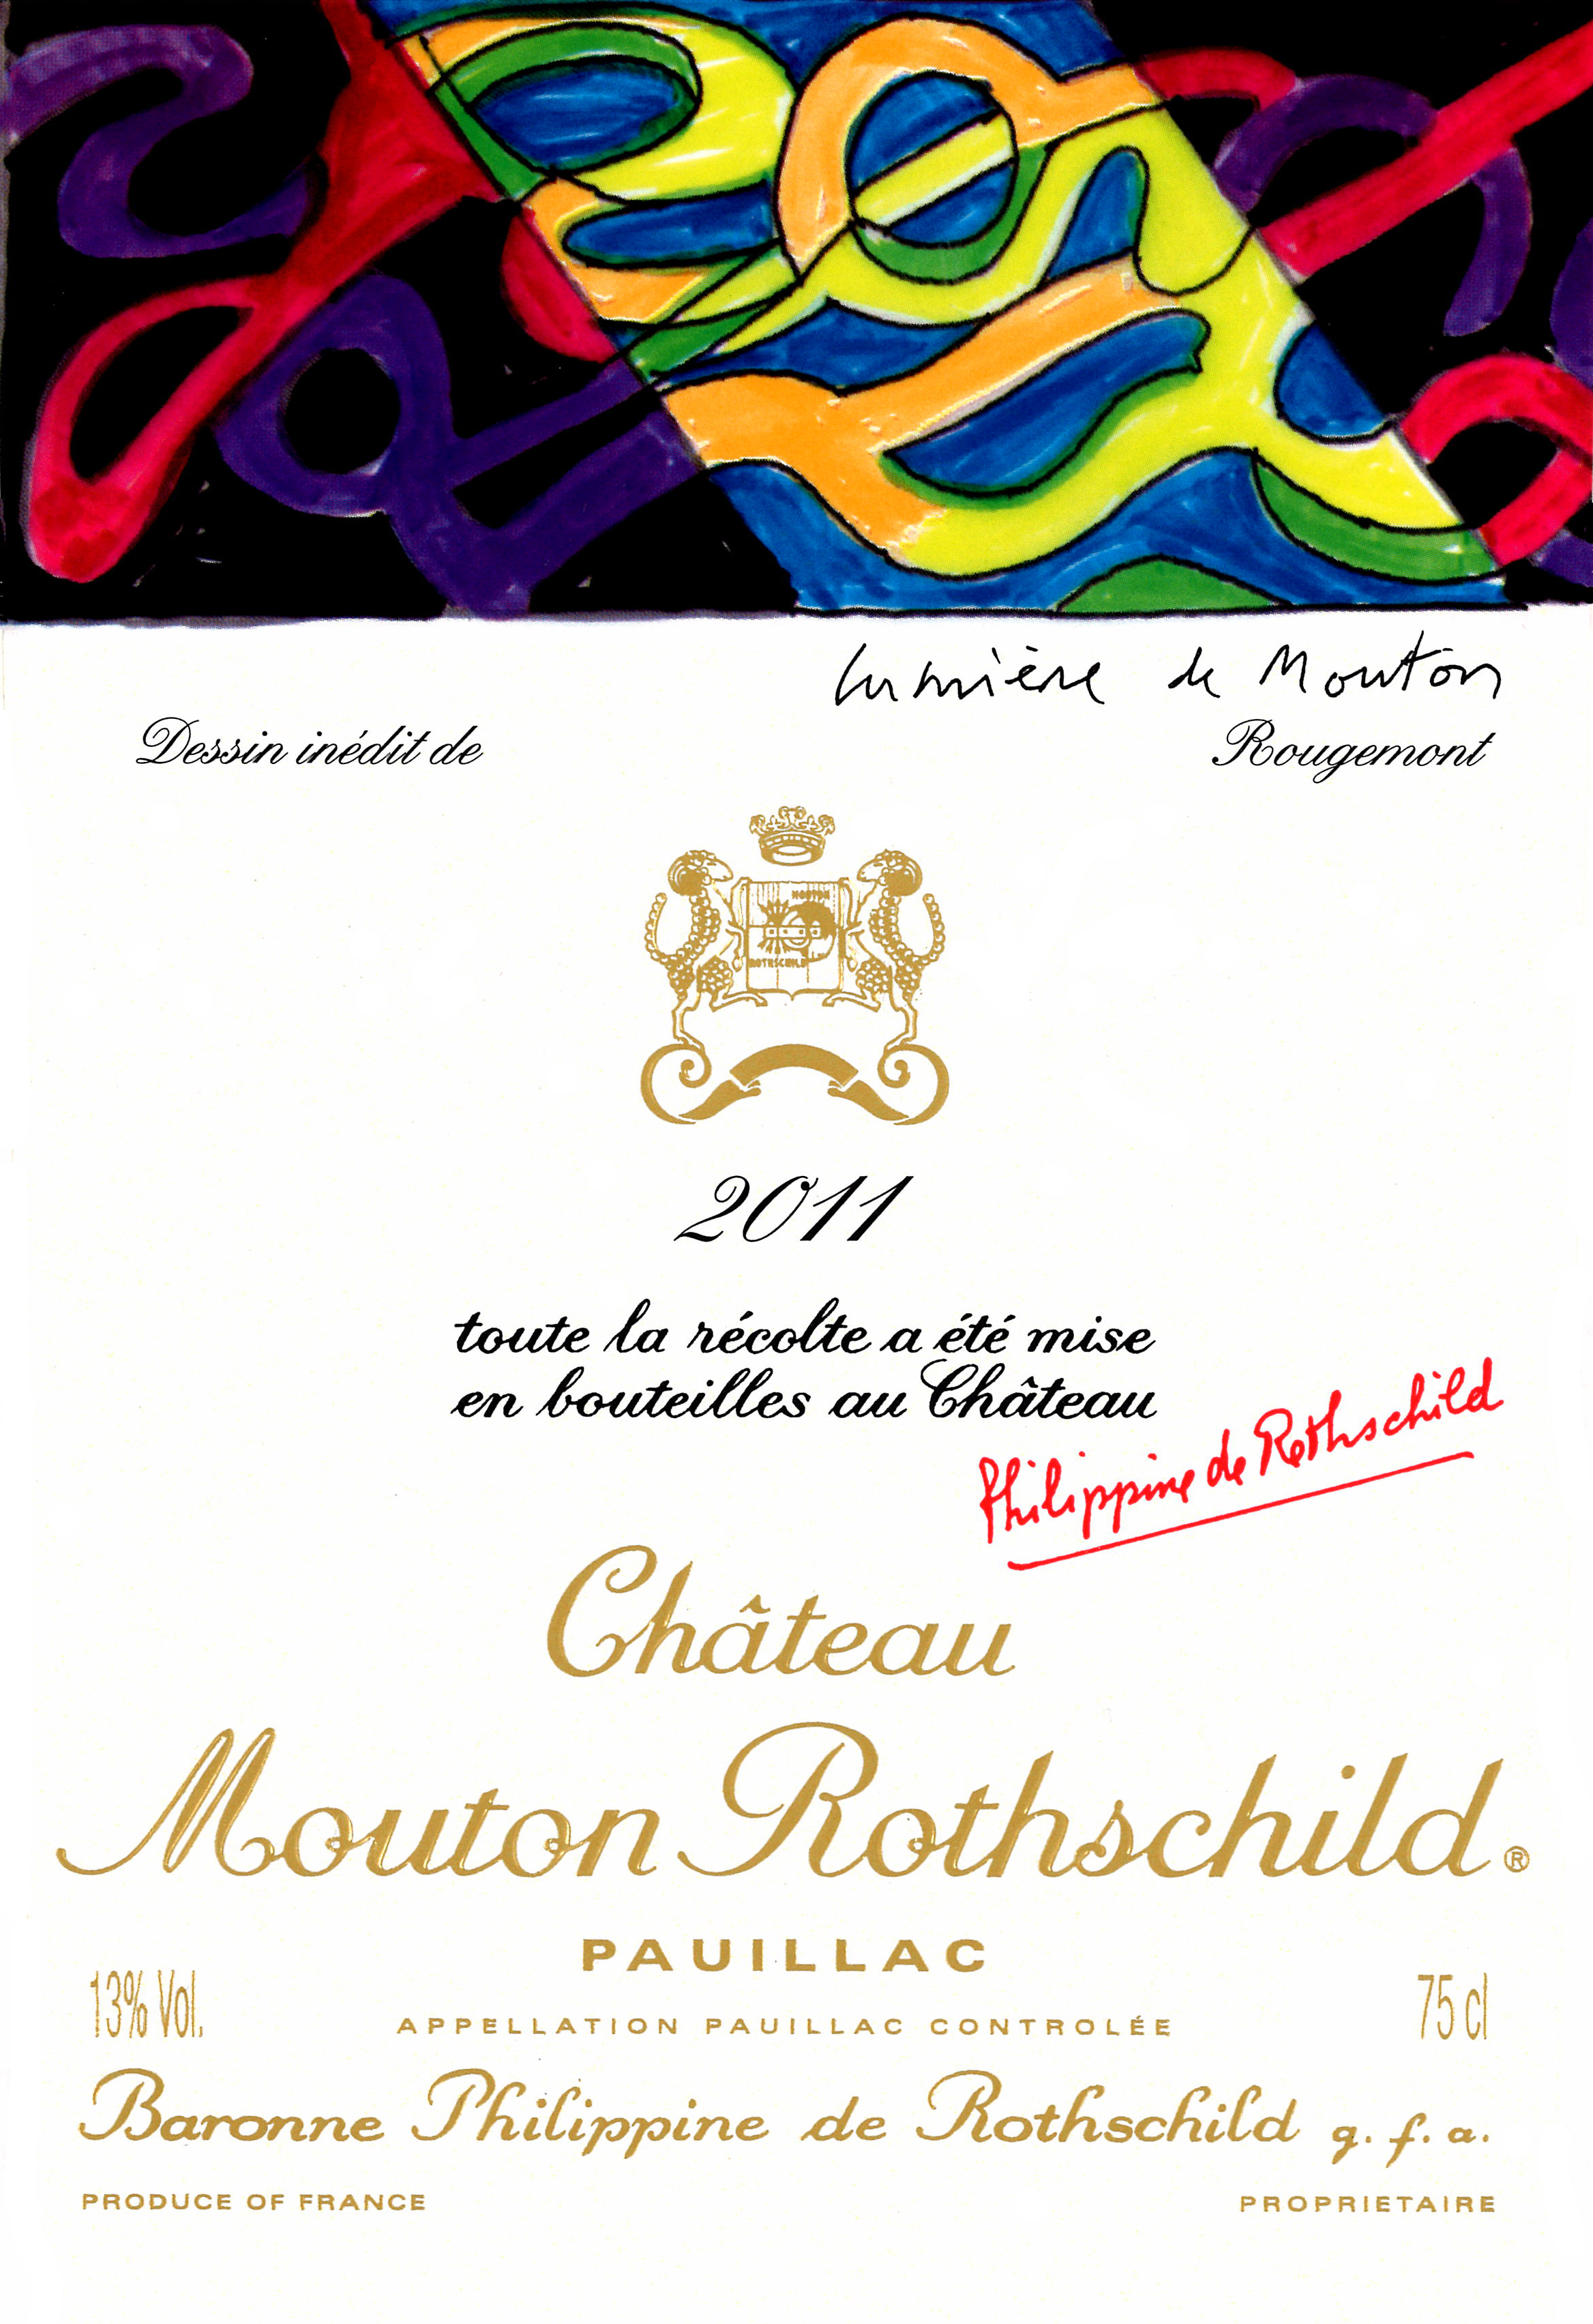 Mouton Rothschild 2011 vintage label